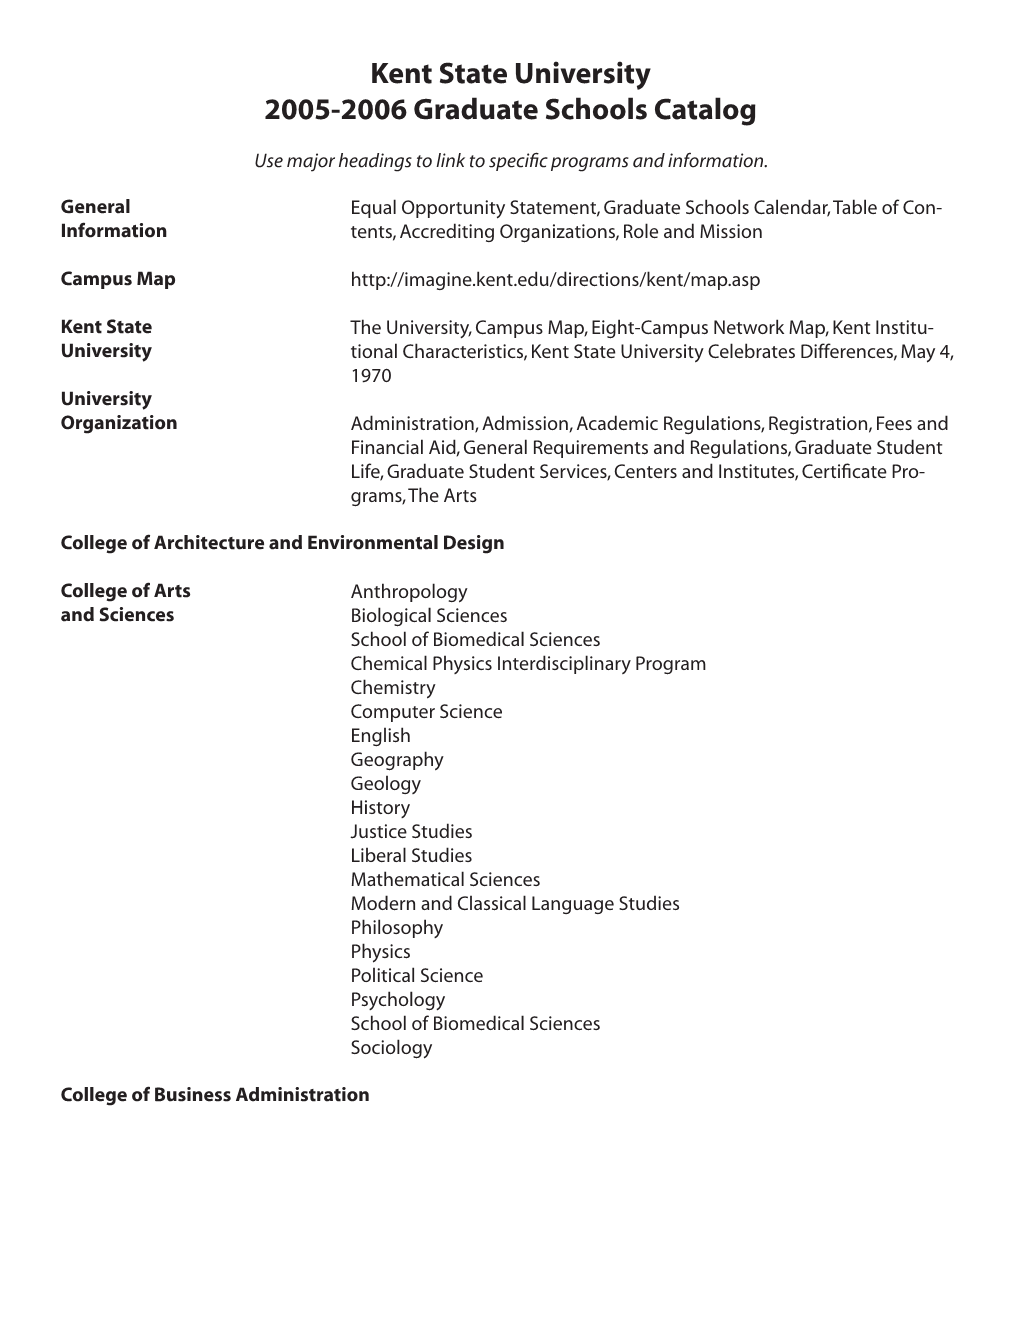 Kent State University 2005-2006 Graduate Schools Catalog